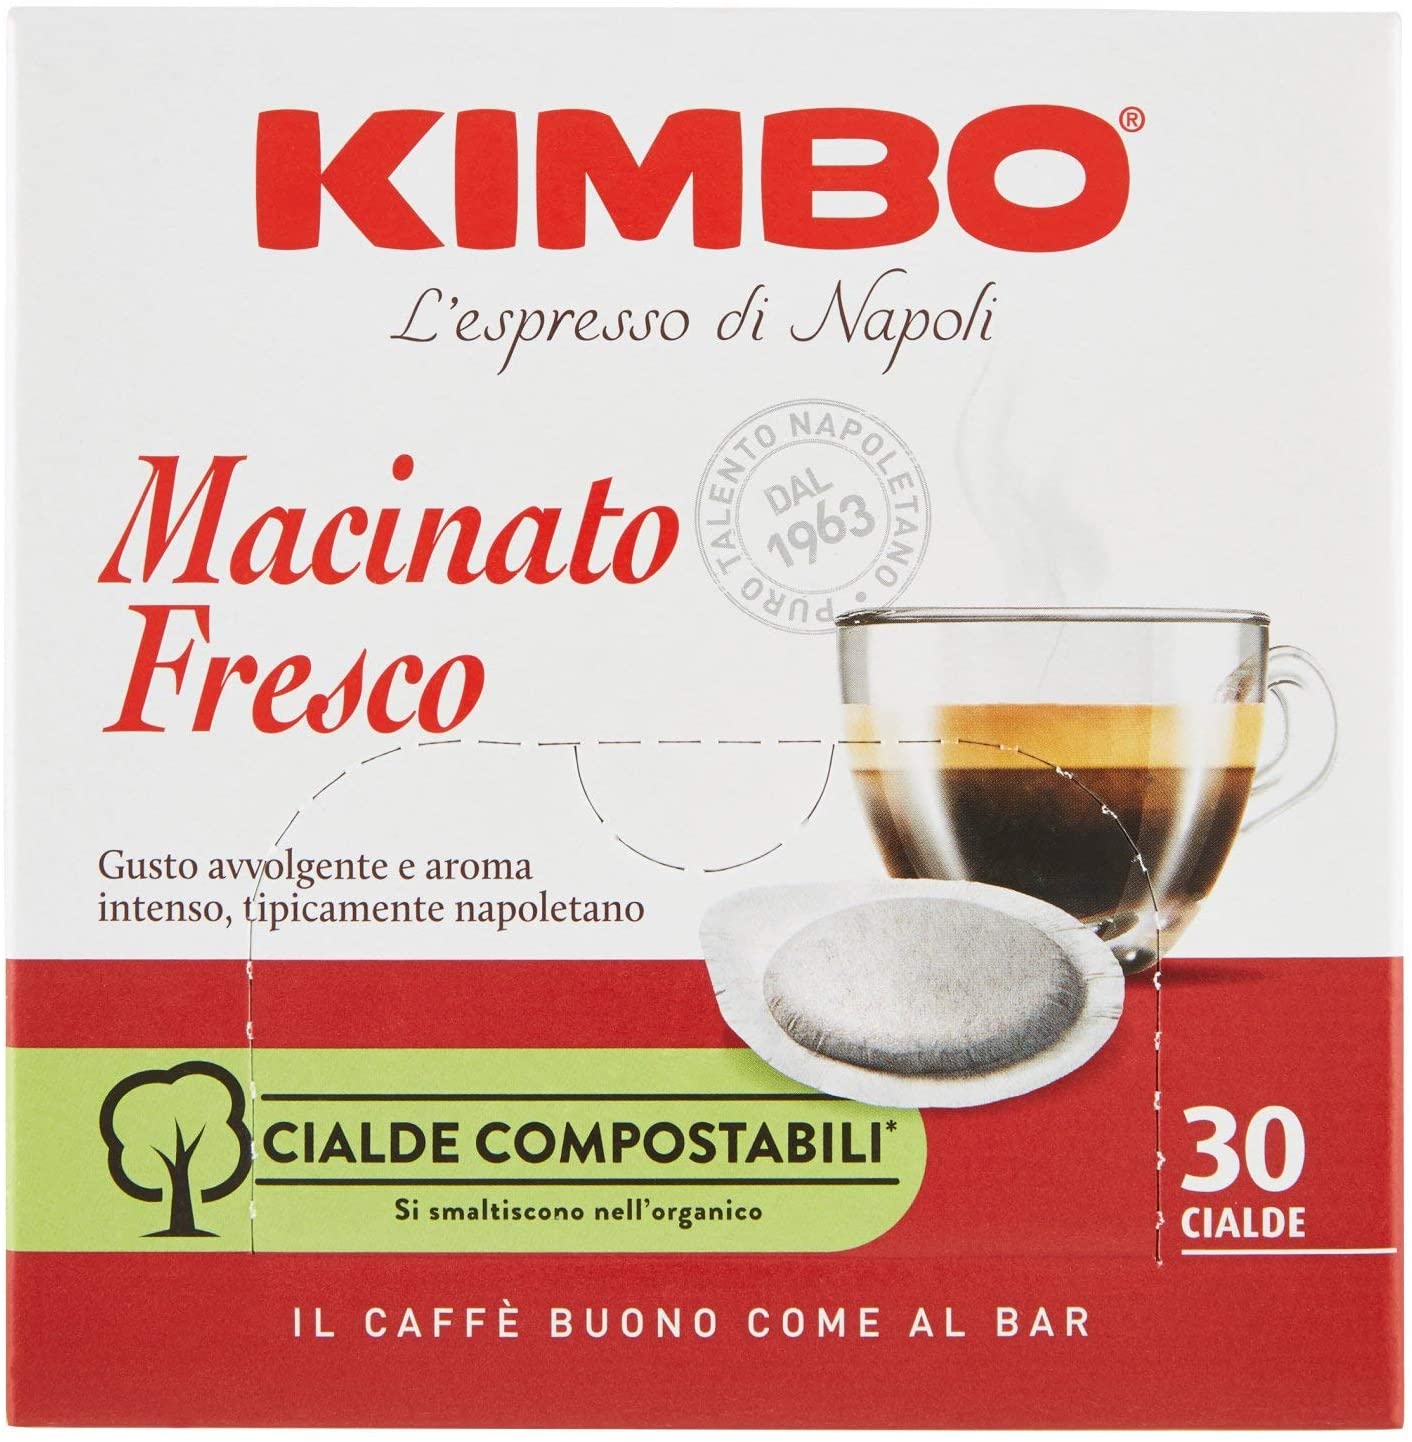 Caffè: Kimbo “coffee macinato fresco” 50 Pods 350gr (12.34 oz) “Imported  from Italy” – Terra World Wide